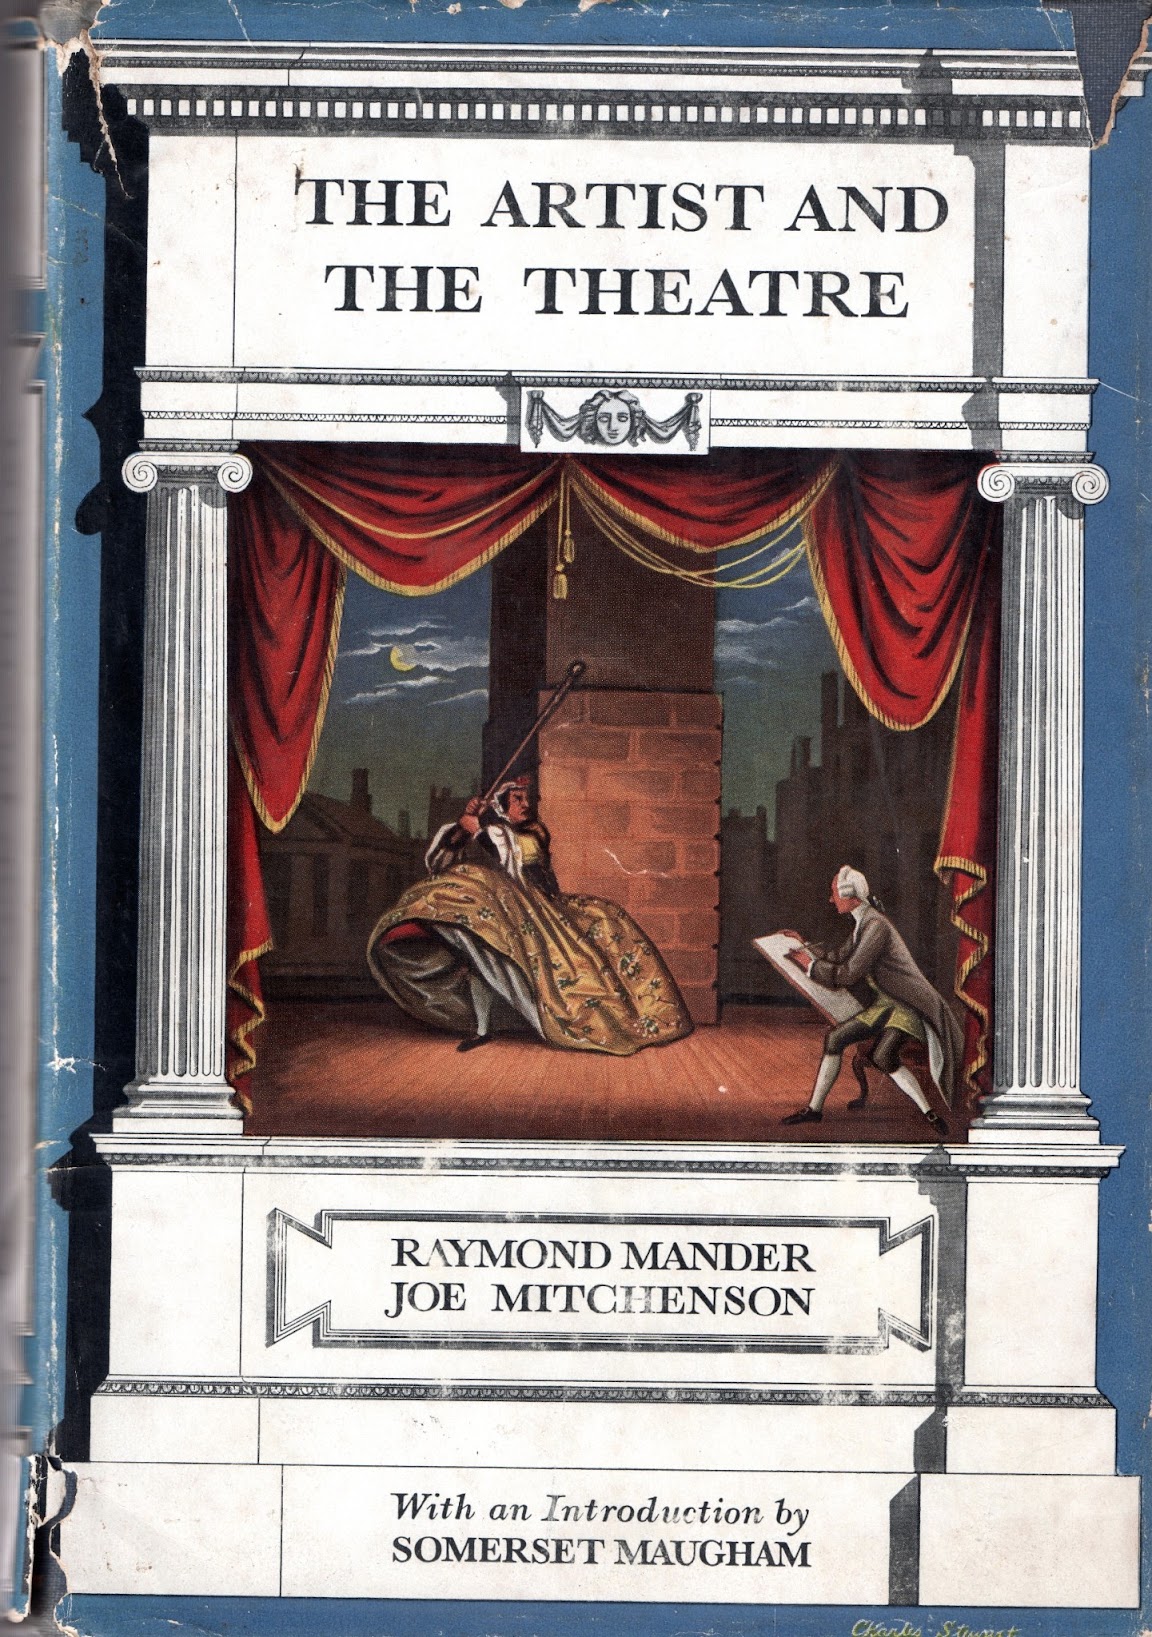 W.S.Maugham "Theatre". Somerset Maugham Theatre пособие. Maugham, w. s. Theatre 1999. Somerset Maugham Theatre пособие для университетов. Читать театр сомерсет